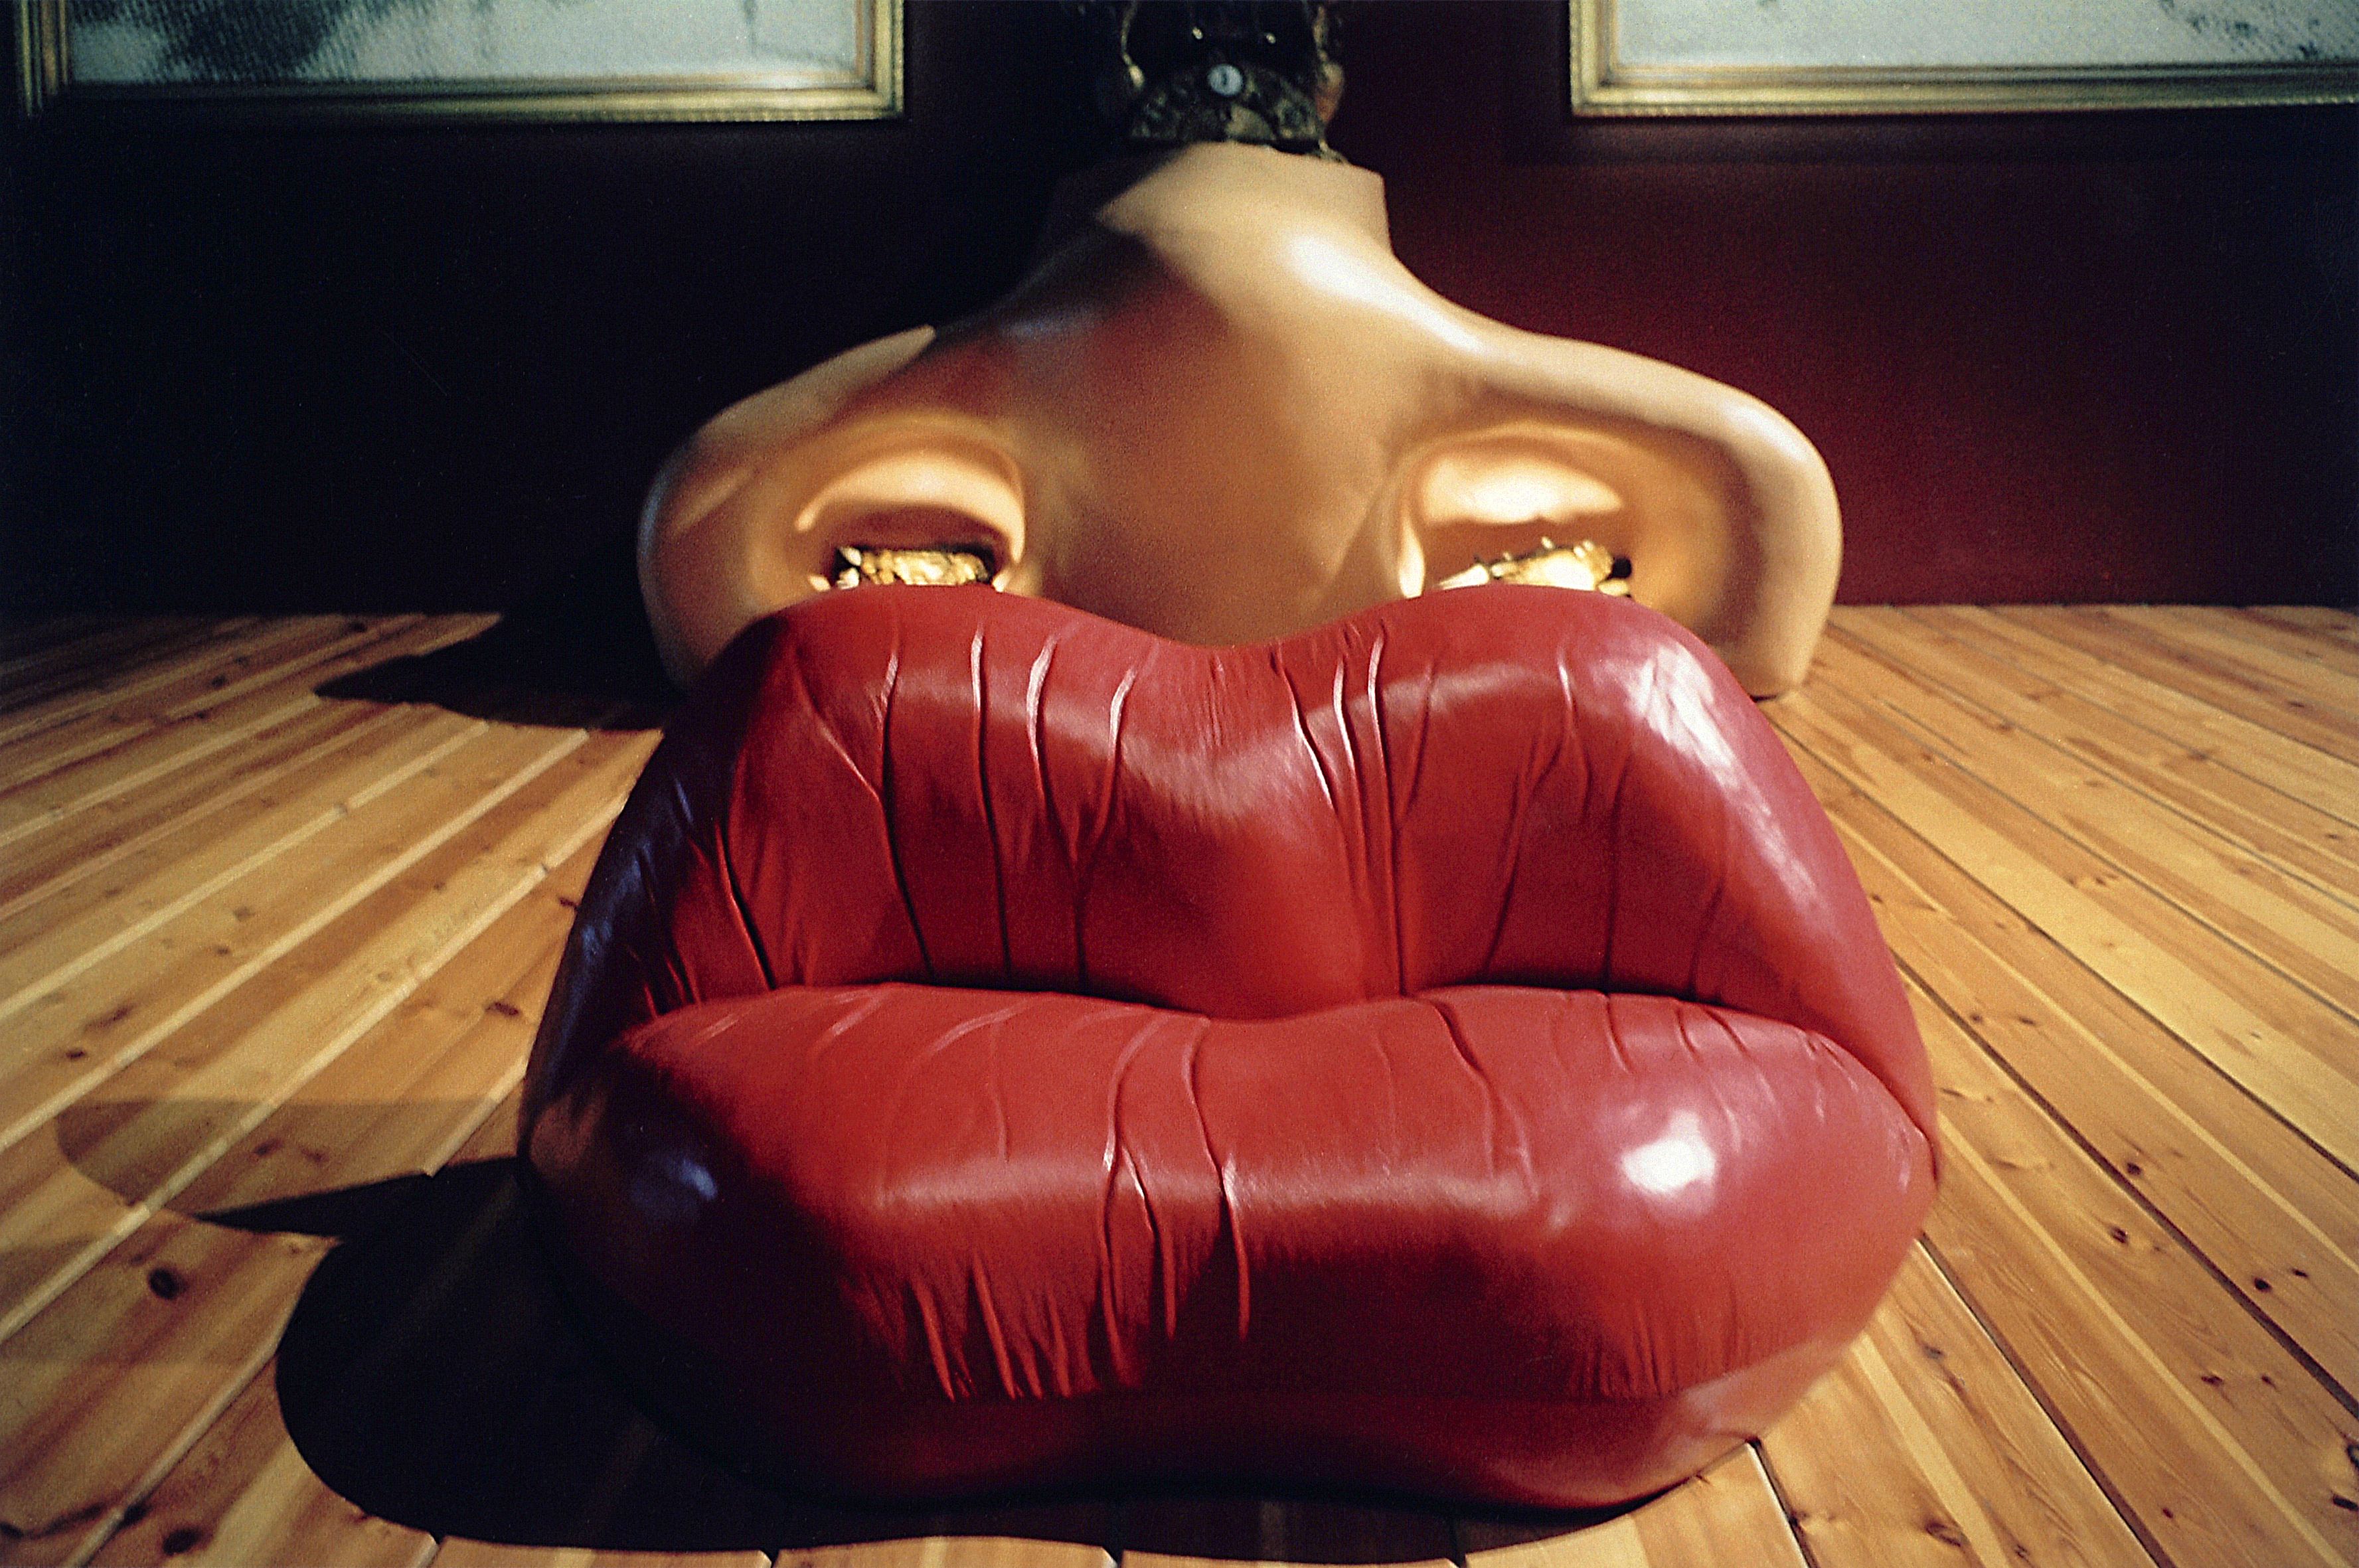 Комната с диваном-губами и тумбочкой в форме носа.
Музей Сальвадора Дали в Фигерасе.